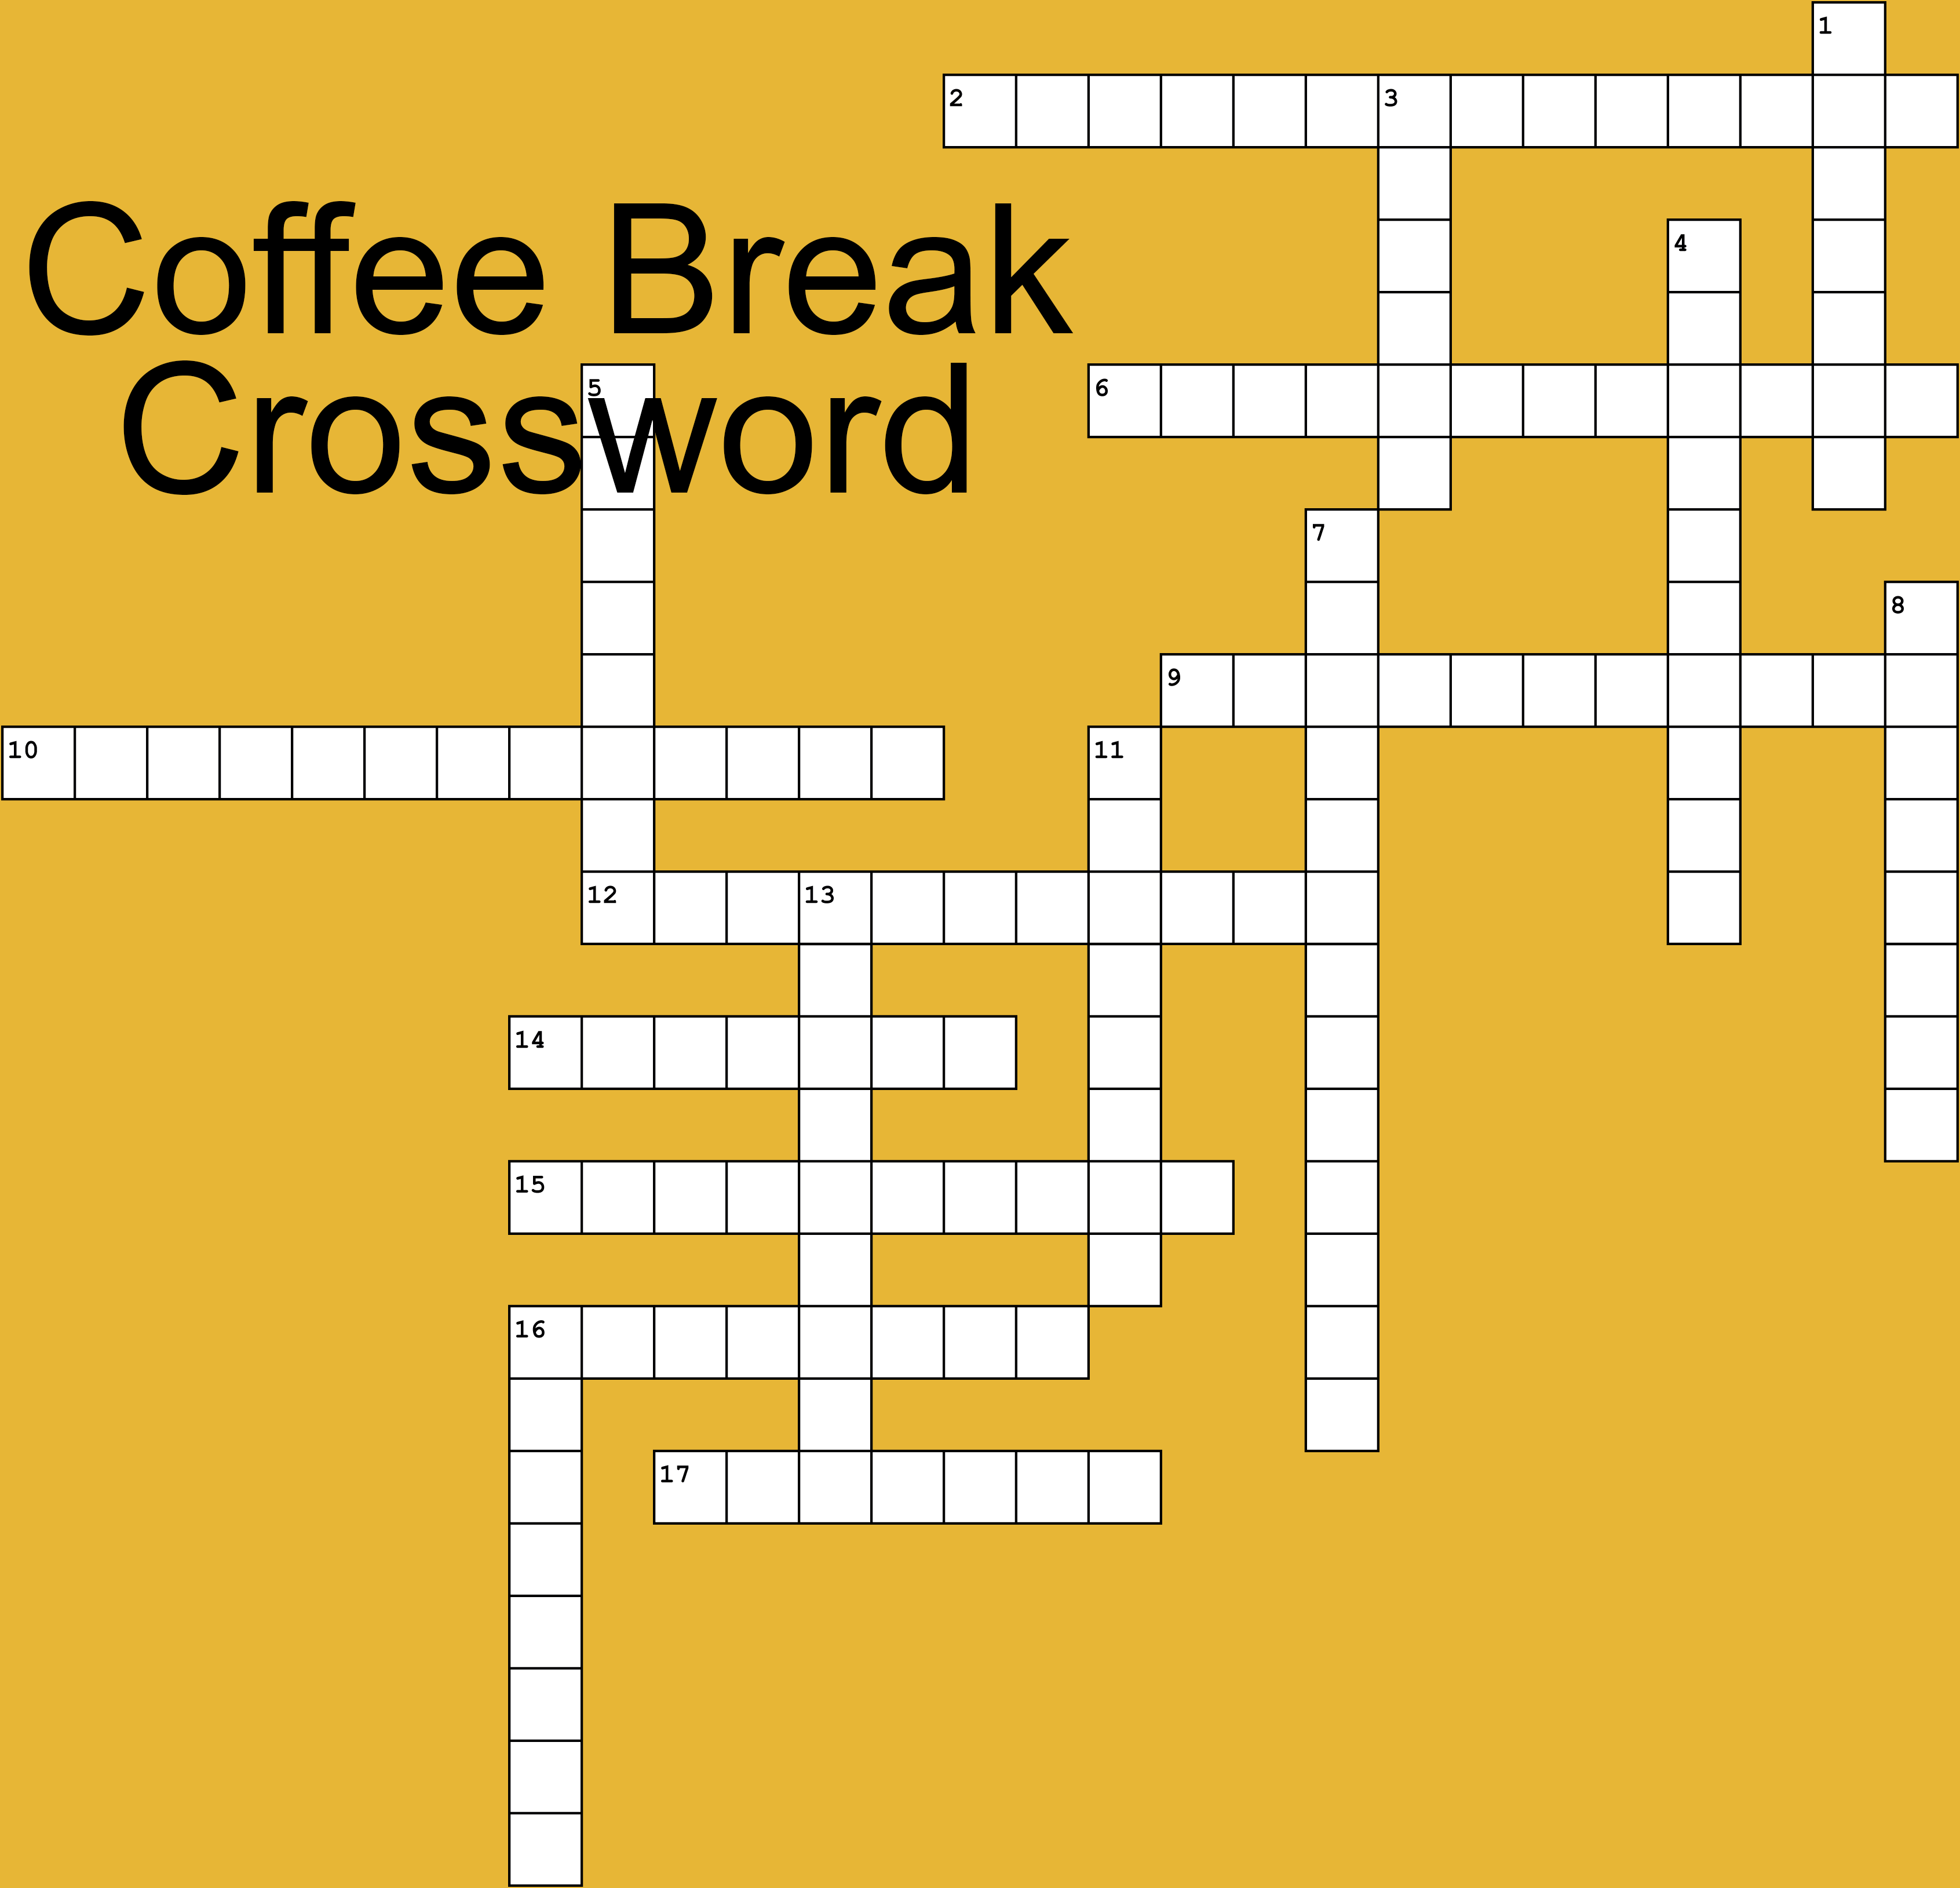 SB-crossword-1-transport-strategies.png